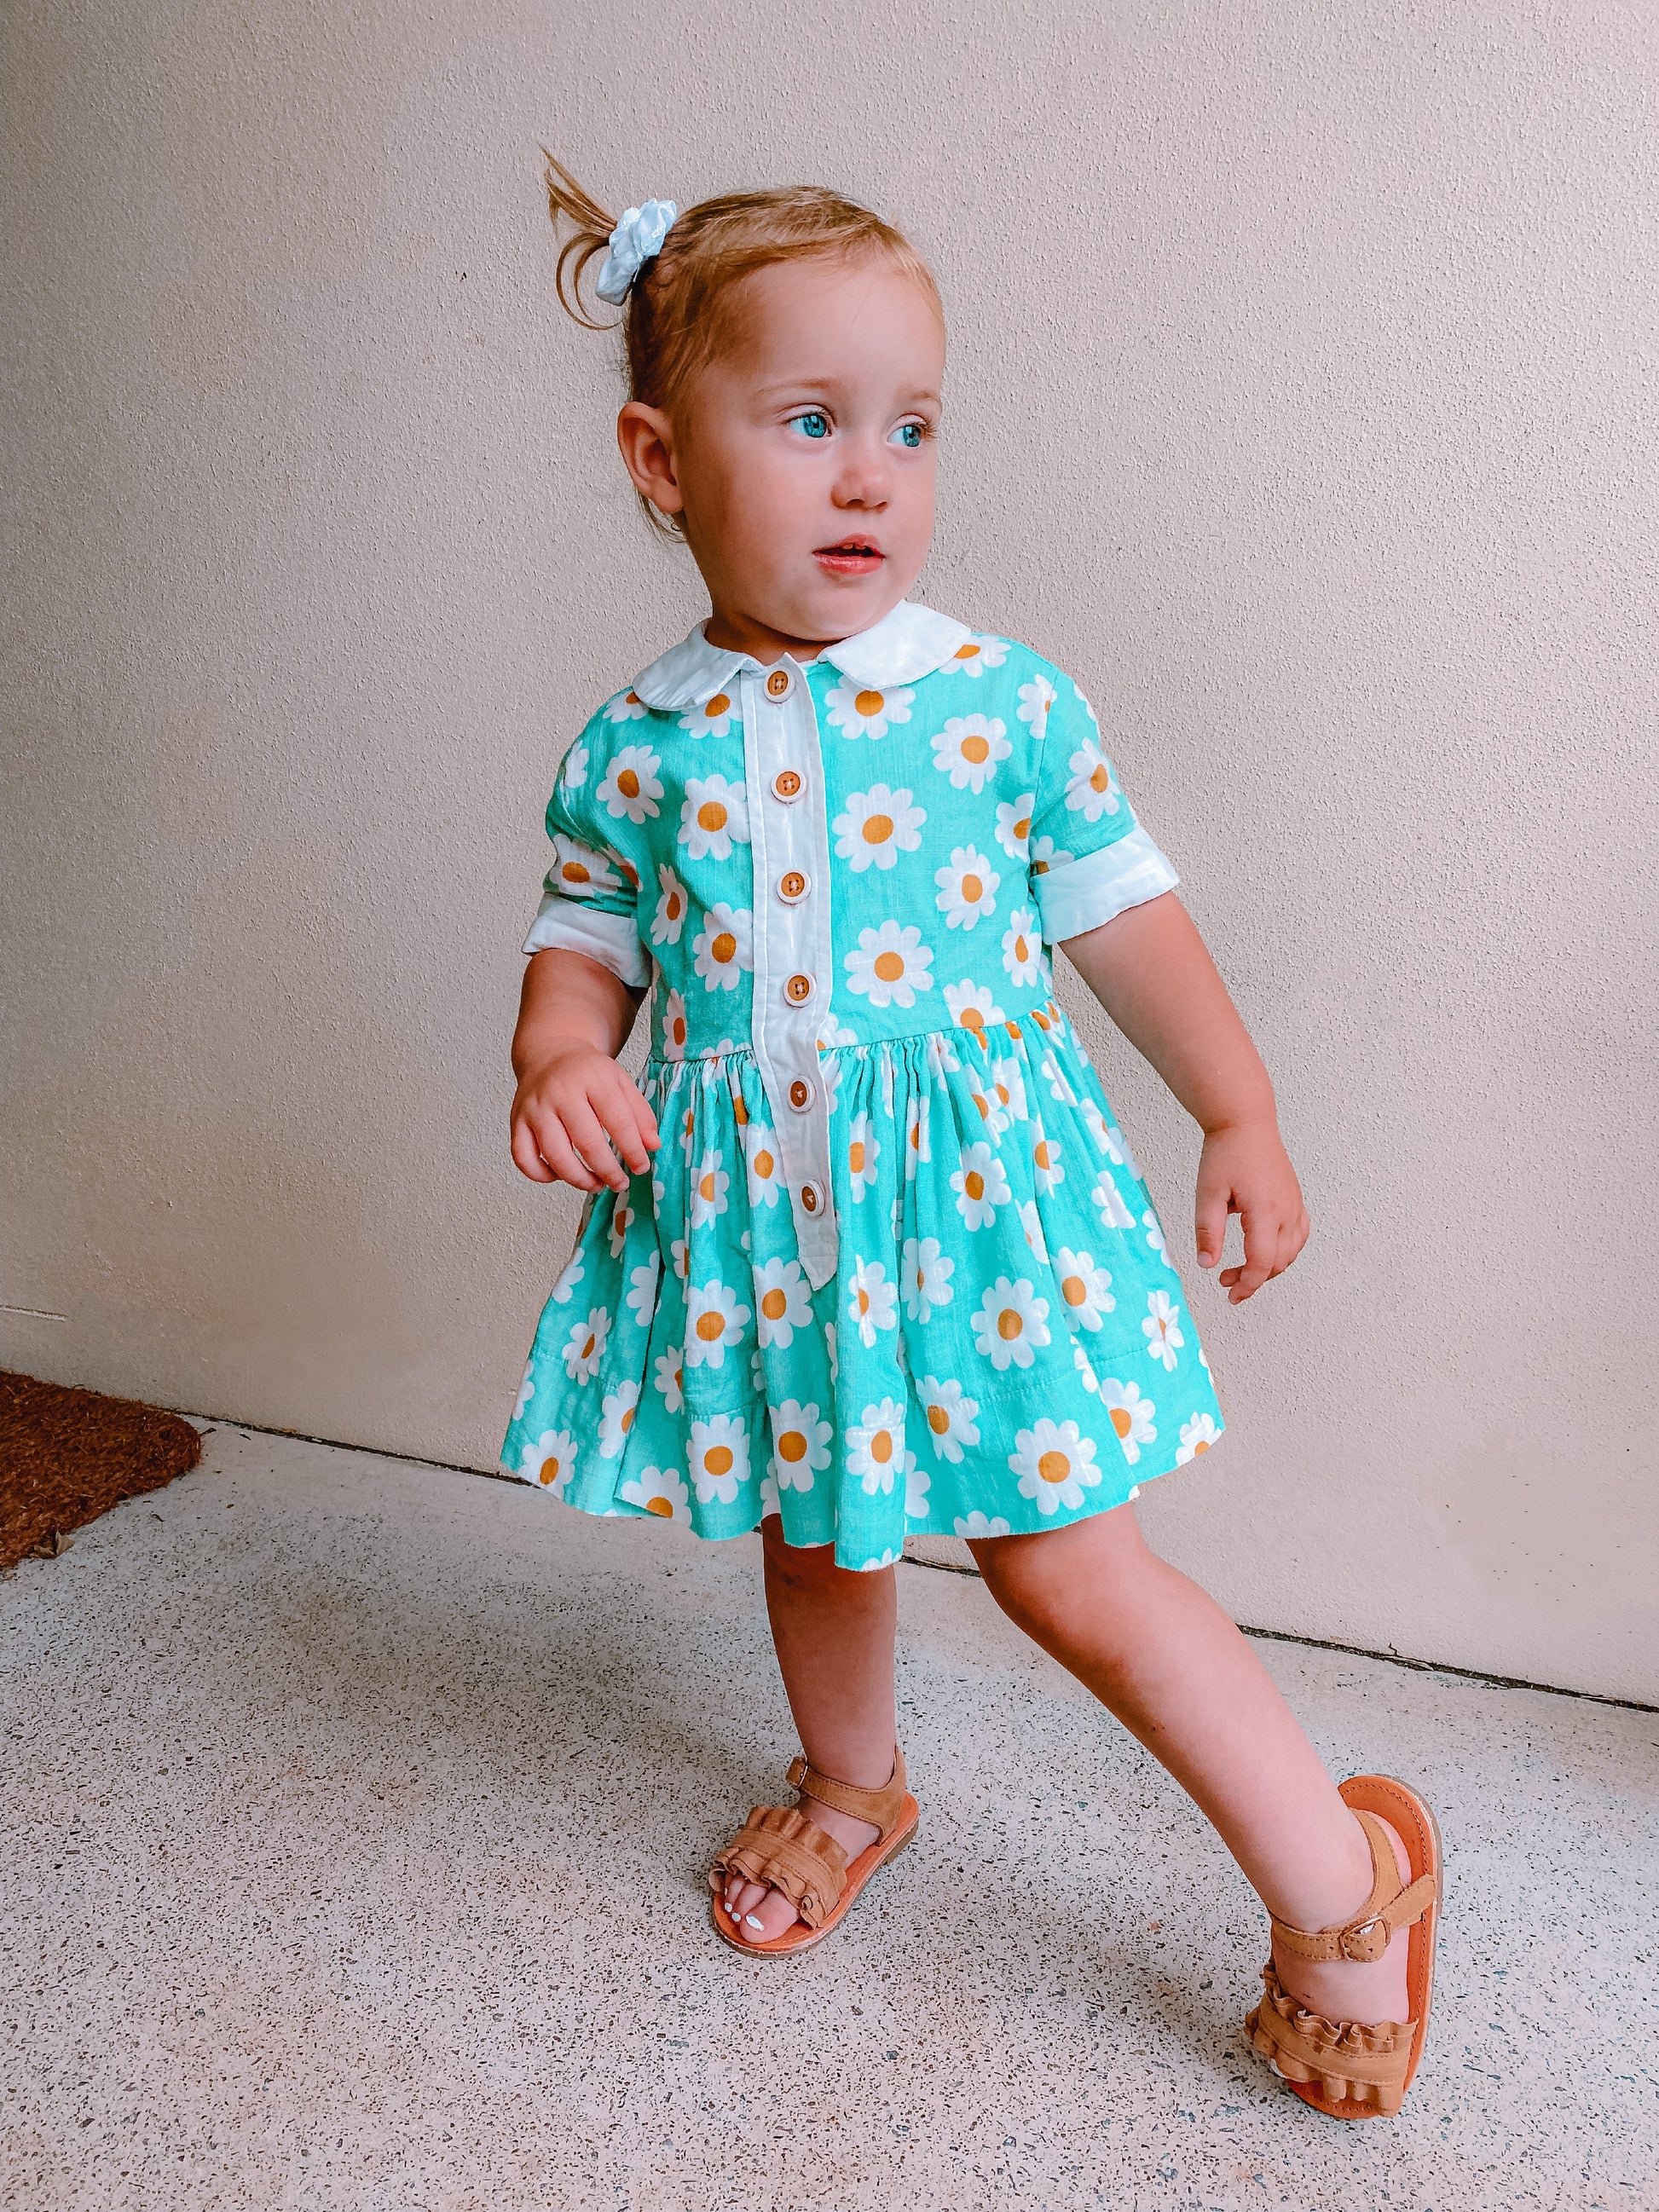 Sadie Baby Sandal - Daphne in Caramel - Stylish caramel-colored sandal